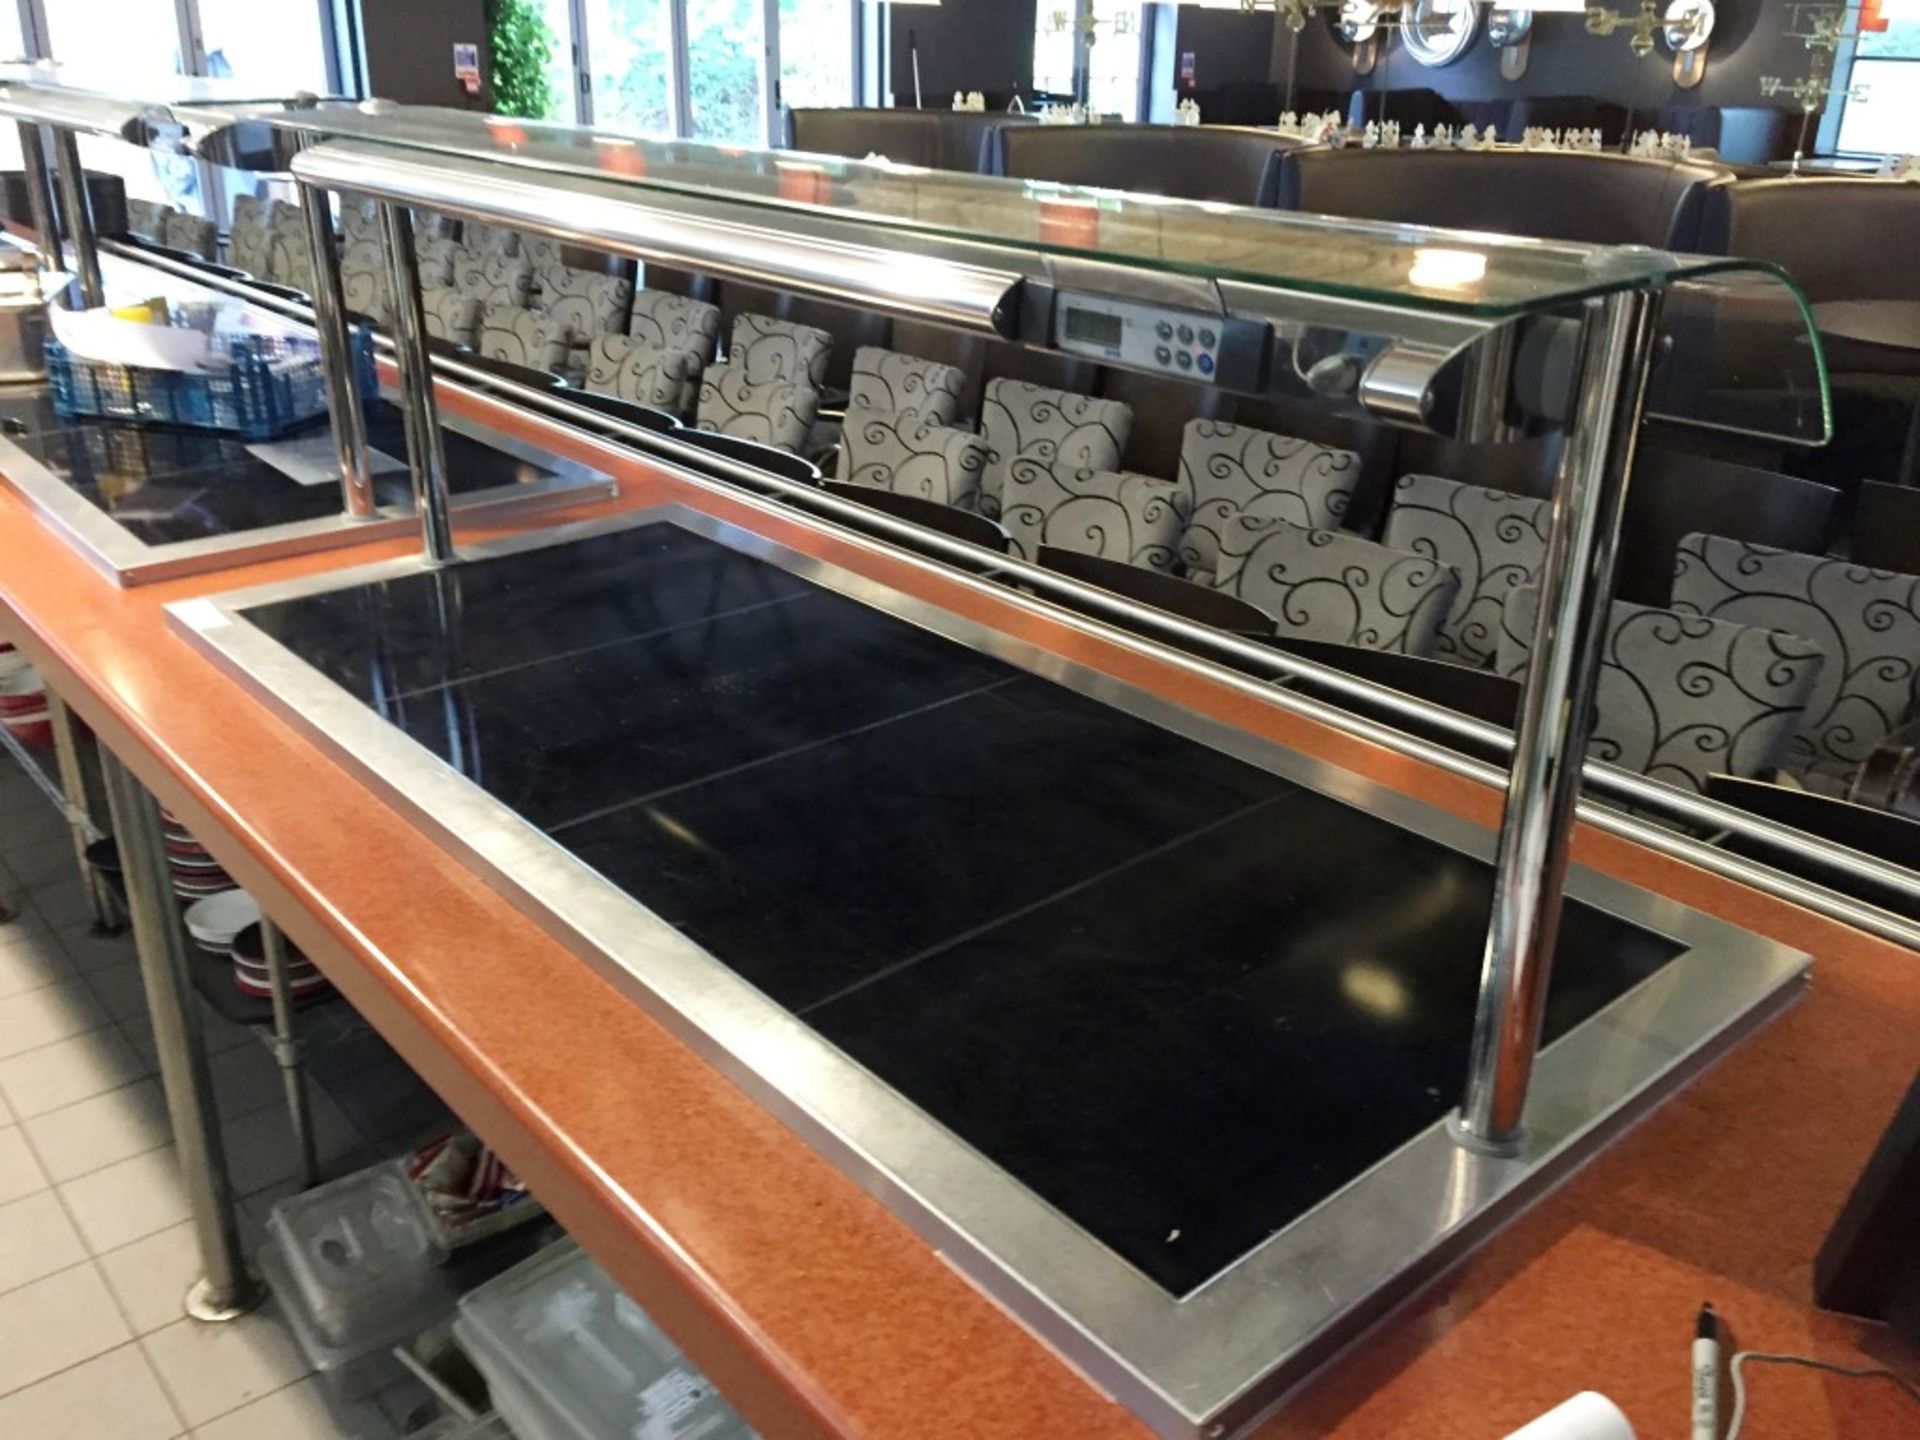 1 x CED Designline Self Serve Ceran Glass Hotplate - Counter Drop In Design With Overhead Heat - Image 2 of 5